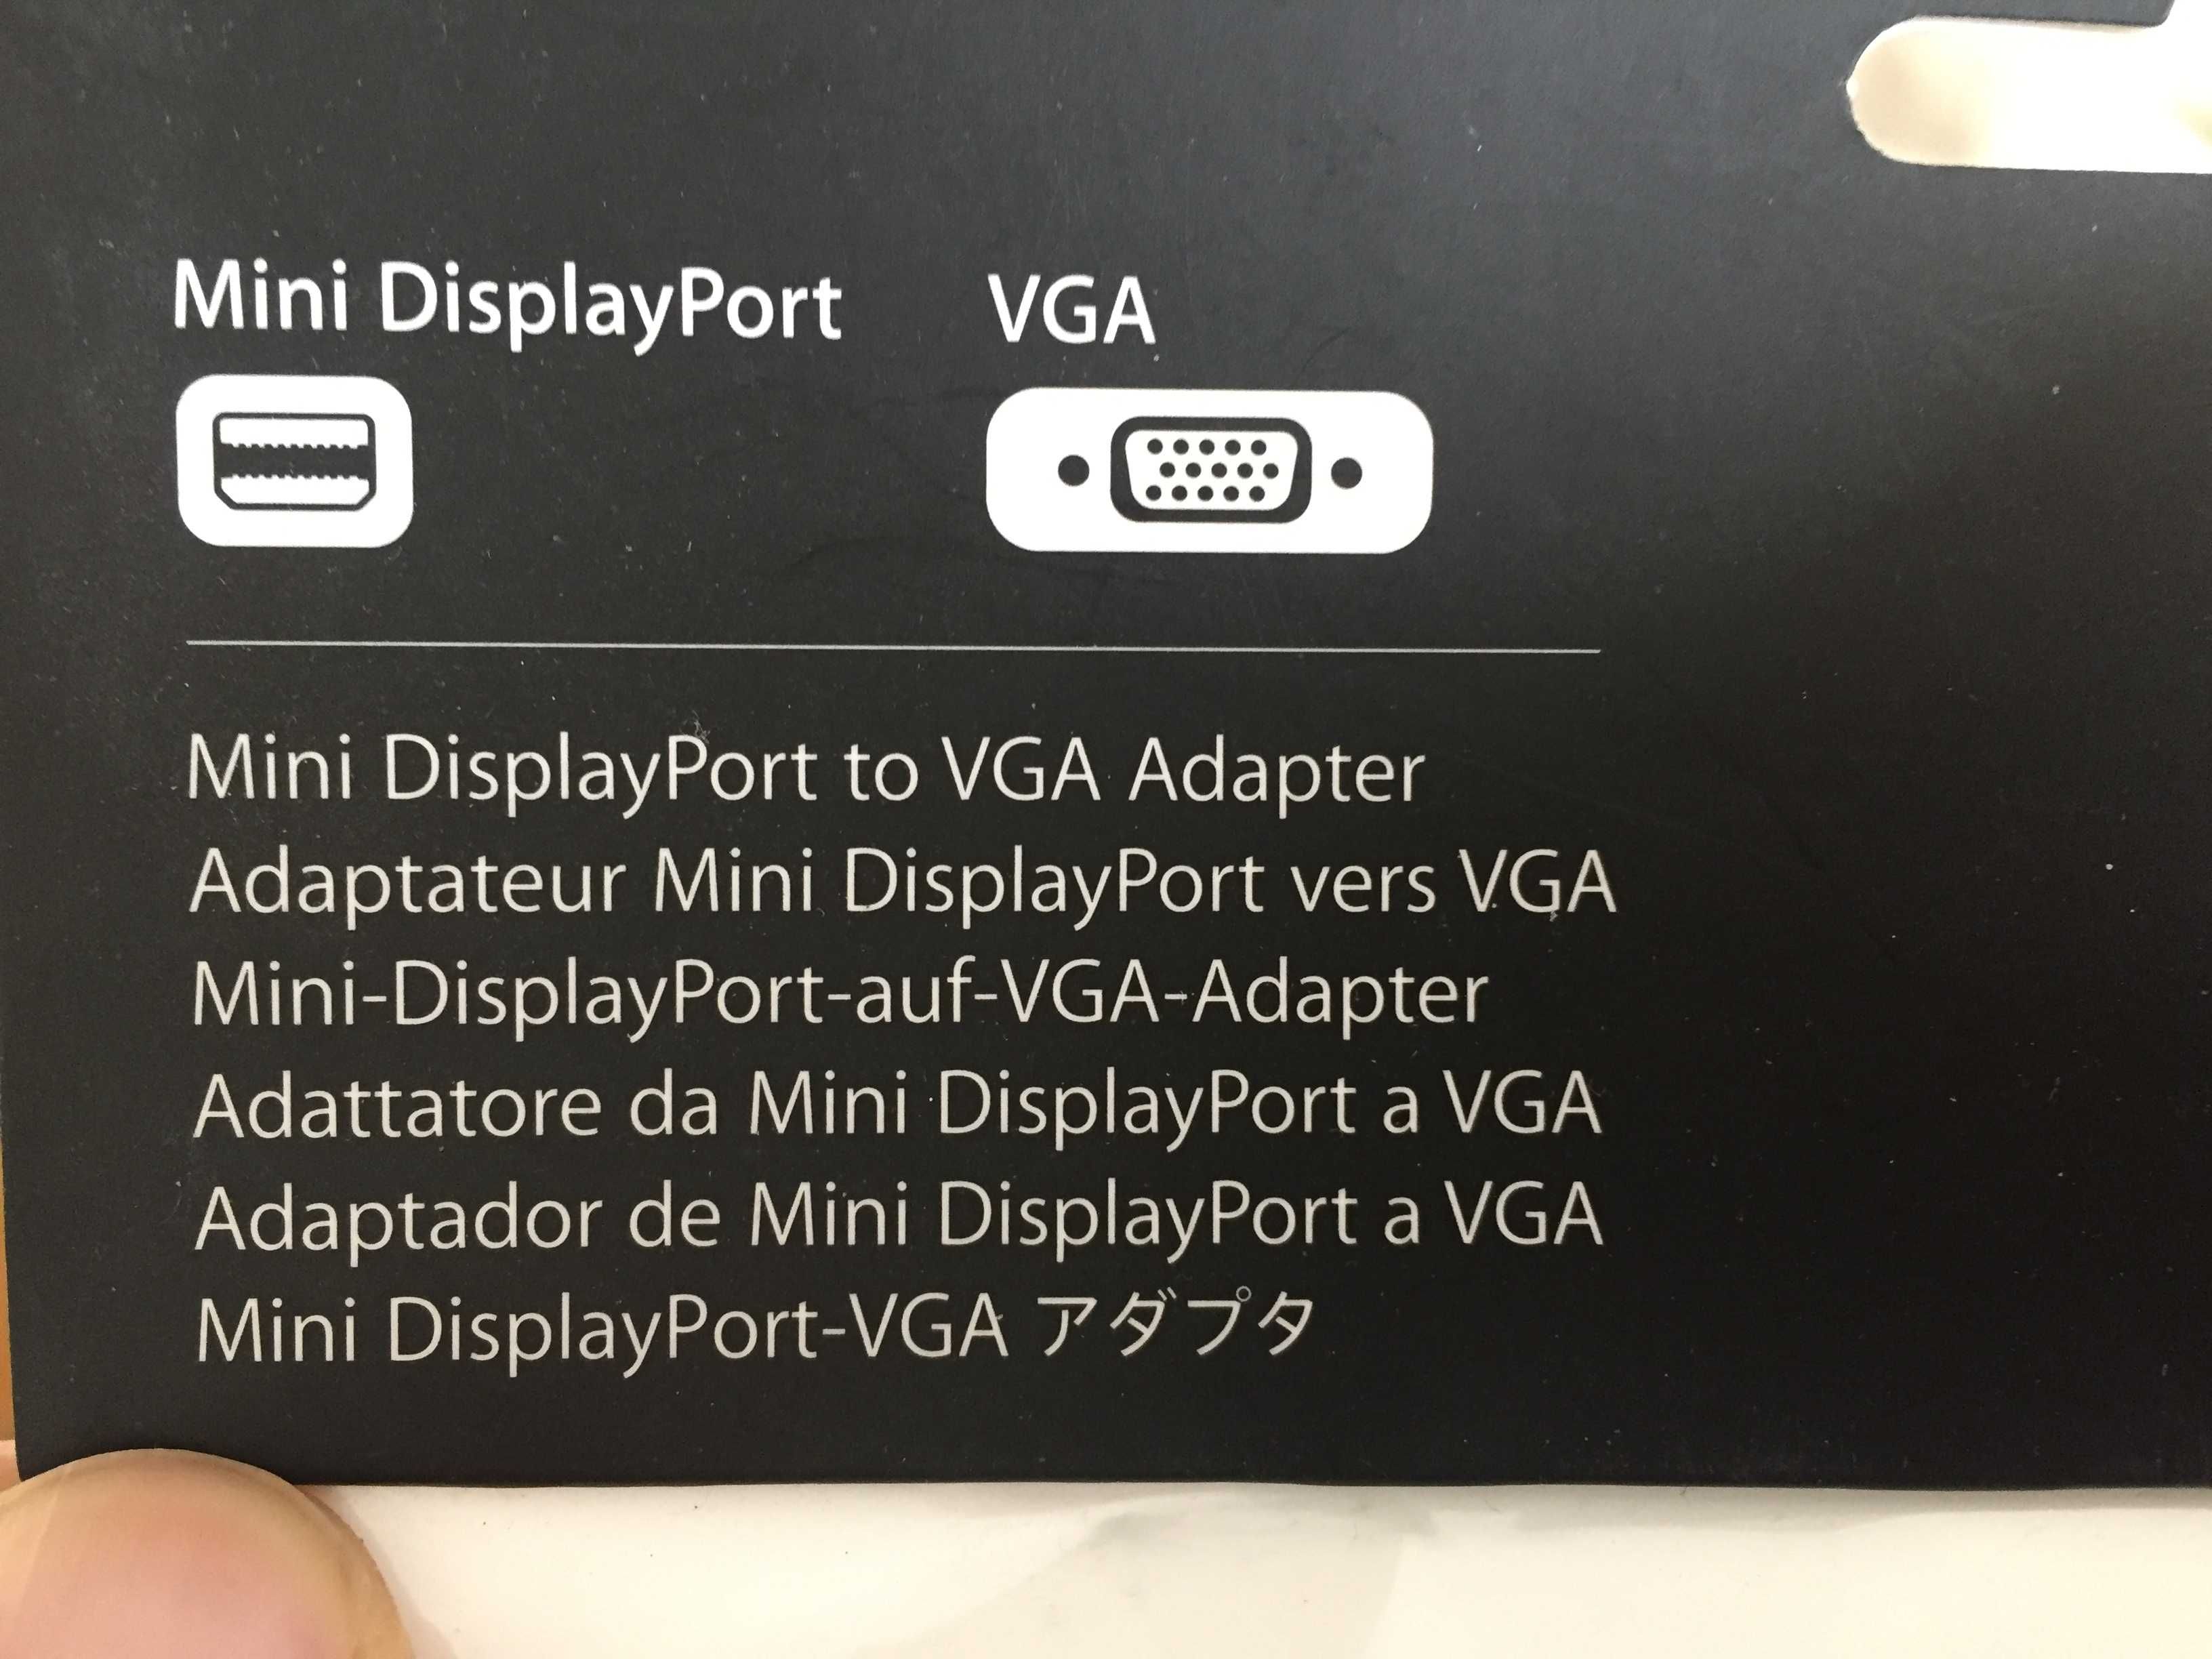 Apple adapter mini display port to VGA oryginalny nowy zapakowany